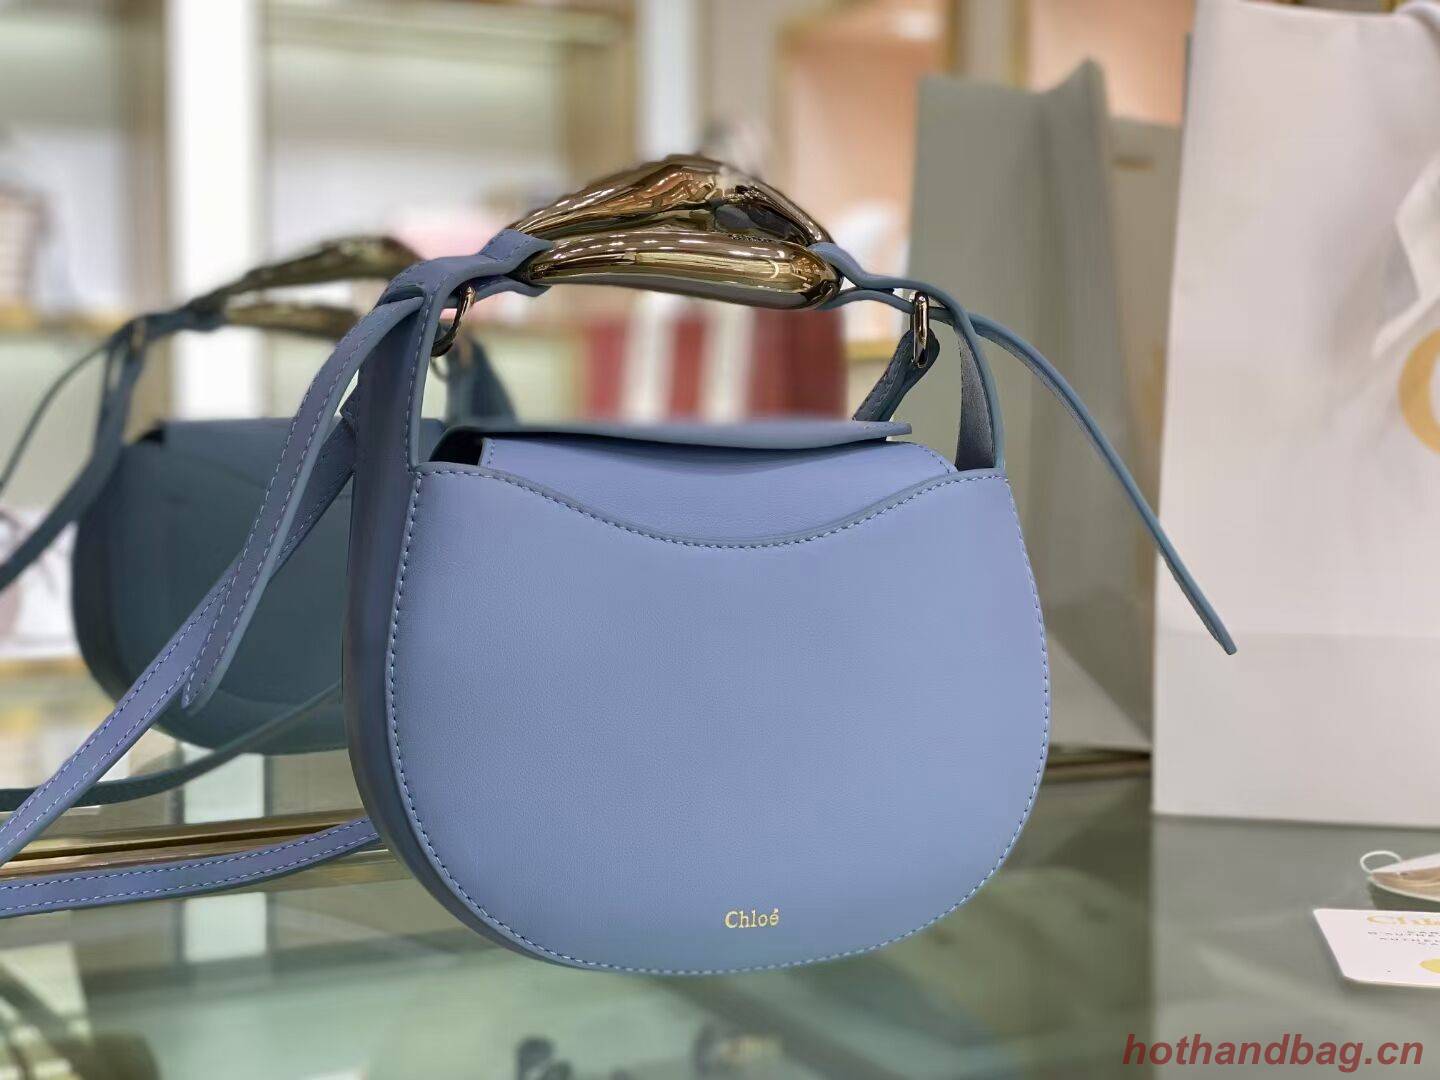 Chloe Original Calfskin Leather Bag 3S1350 sky blue